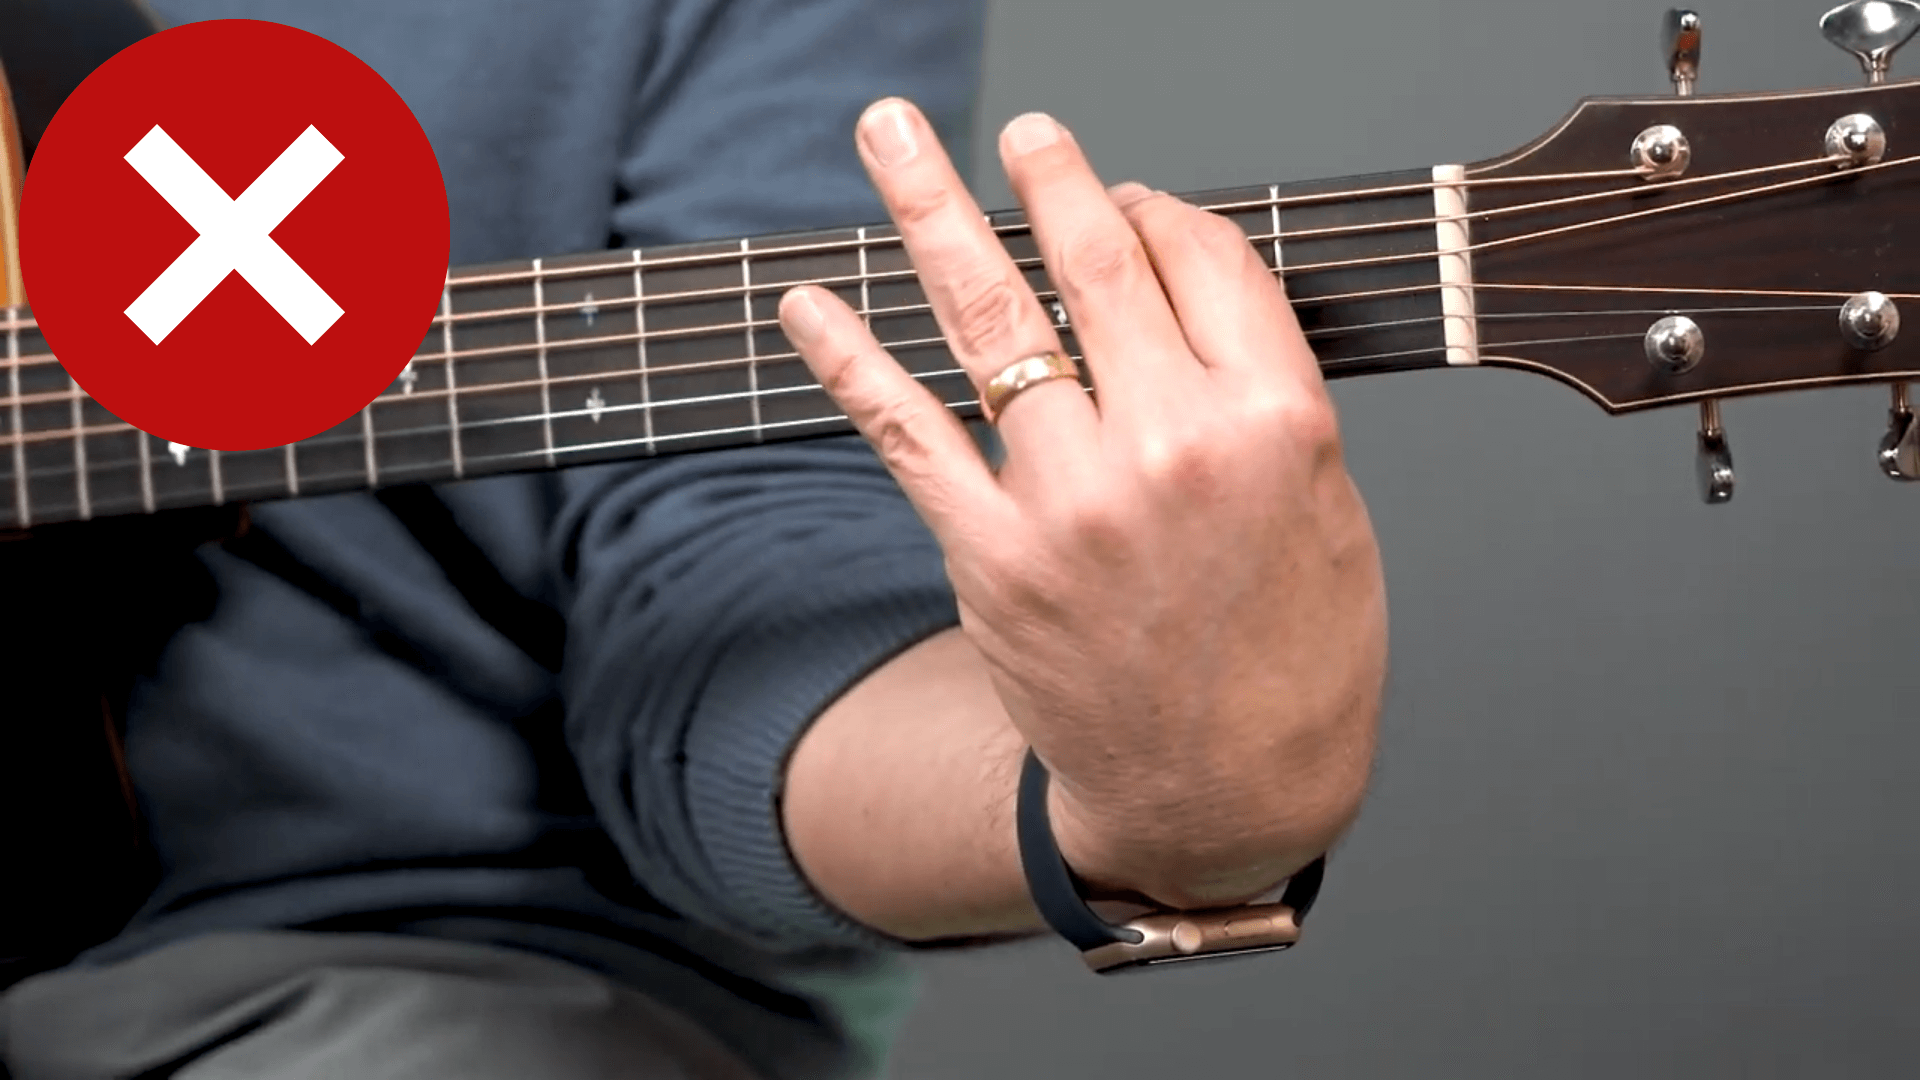 Incorrect Wrist Position on Guitar